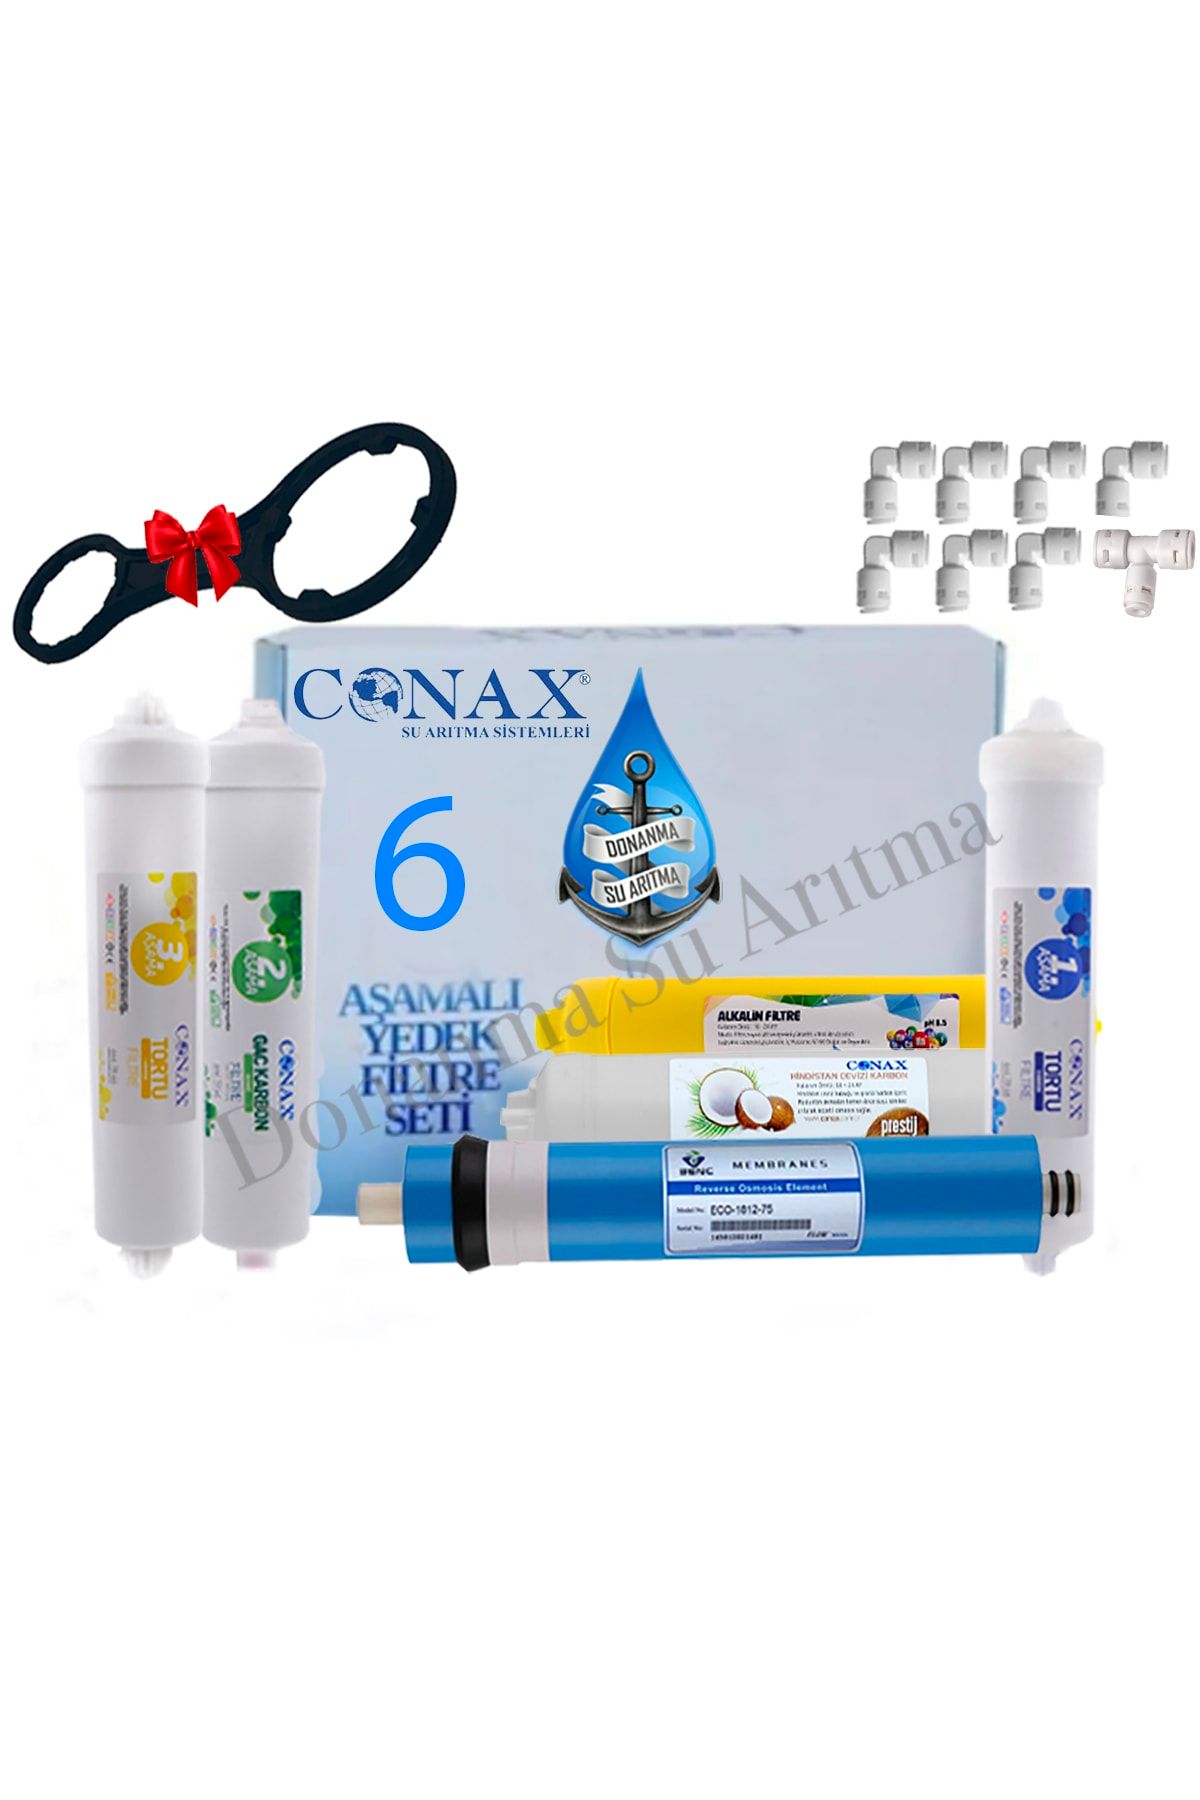 Conax Kapalı Kasa 6 Lı Inline Filtre Seti Benc Membranlı Tüm Kapalı Kasa Cihazlar Ile Uyumlu